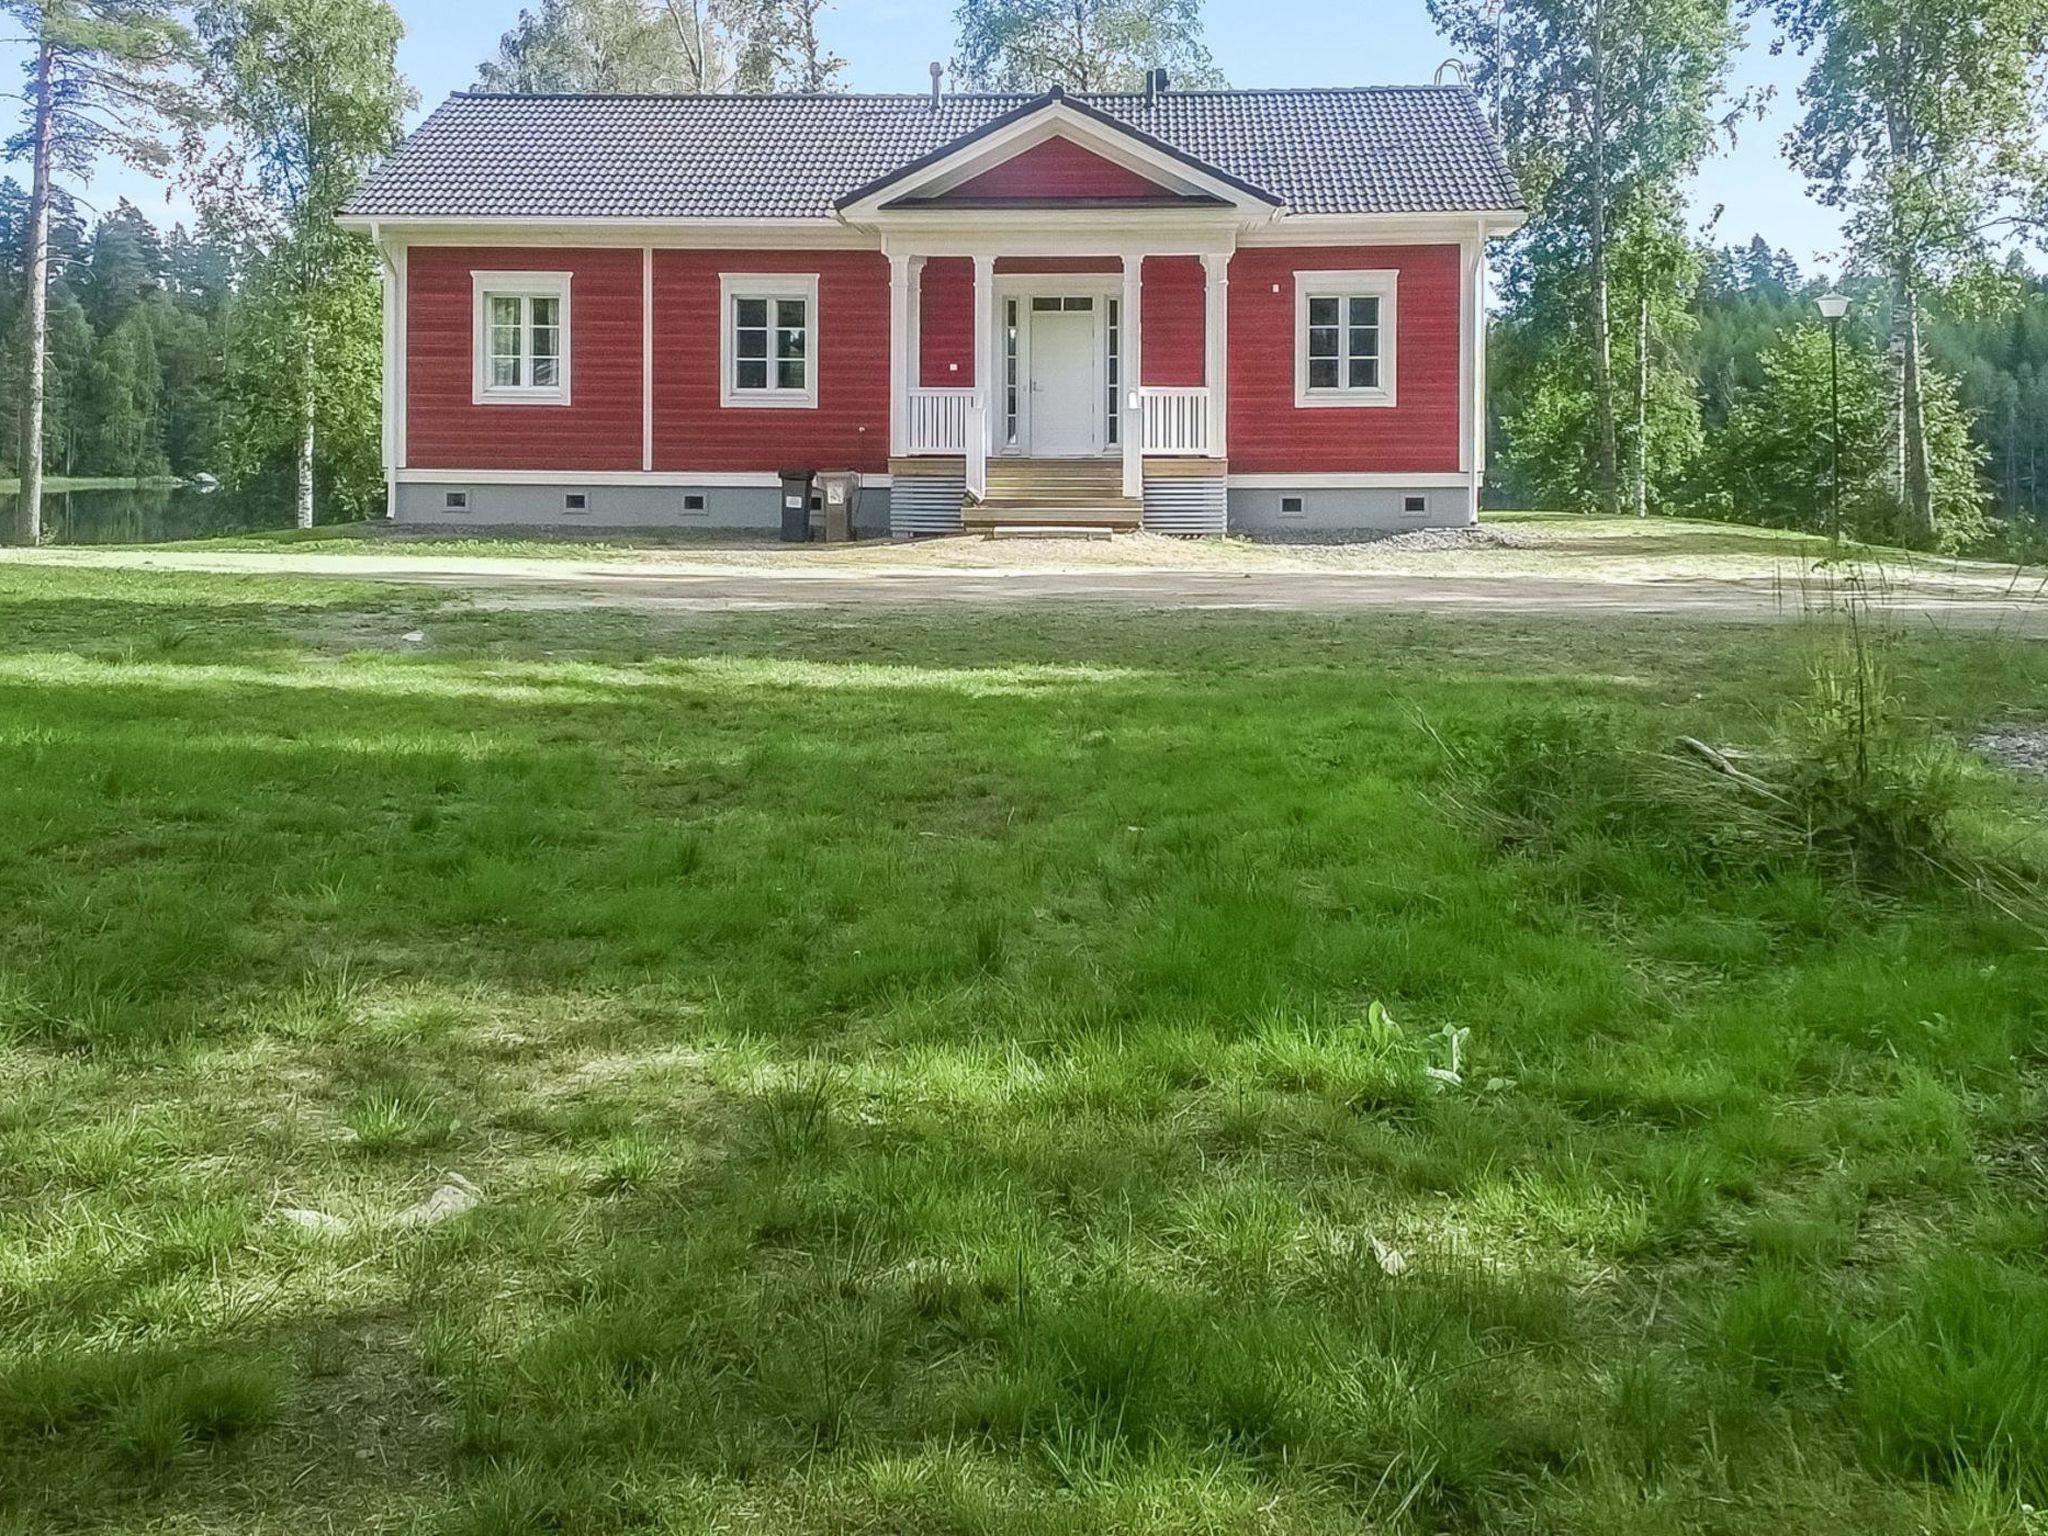 Photo 3 - 3 bedroom House in Mikkeli with sauna